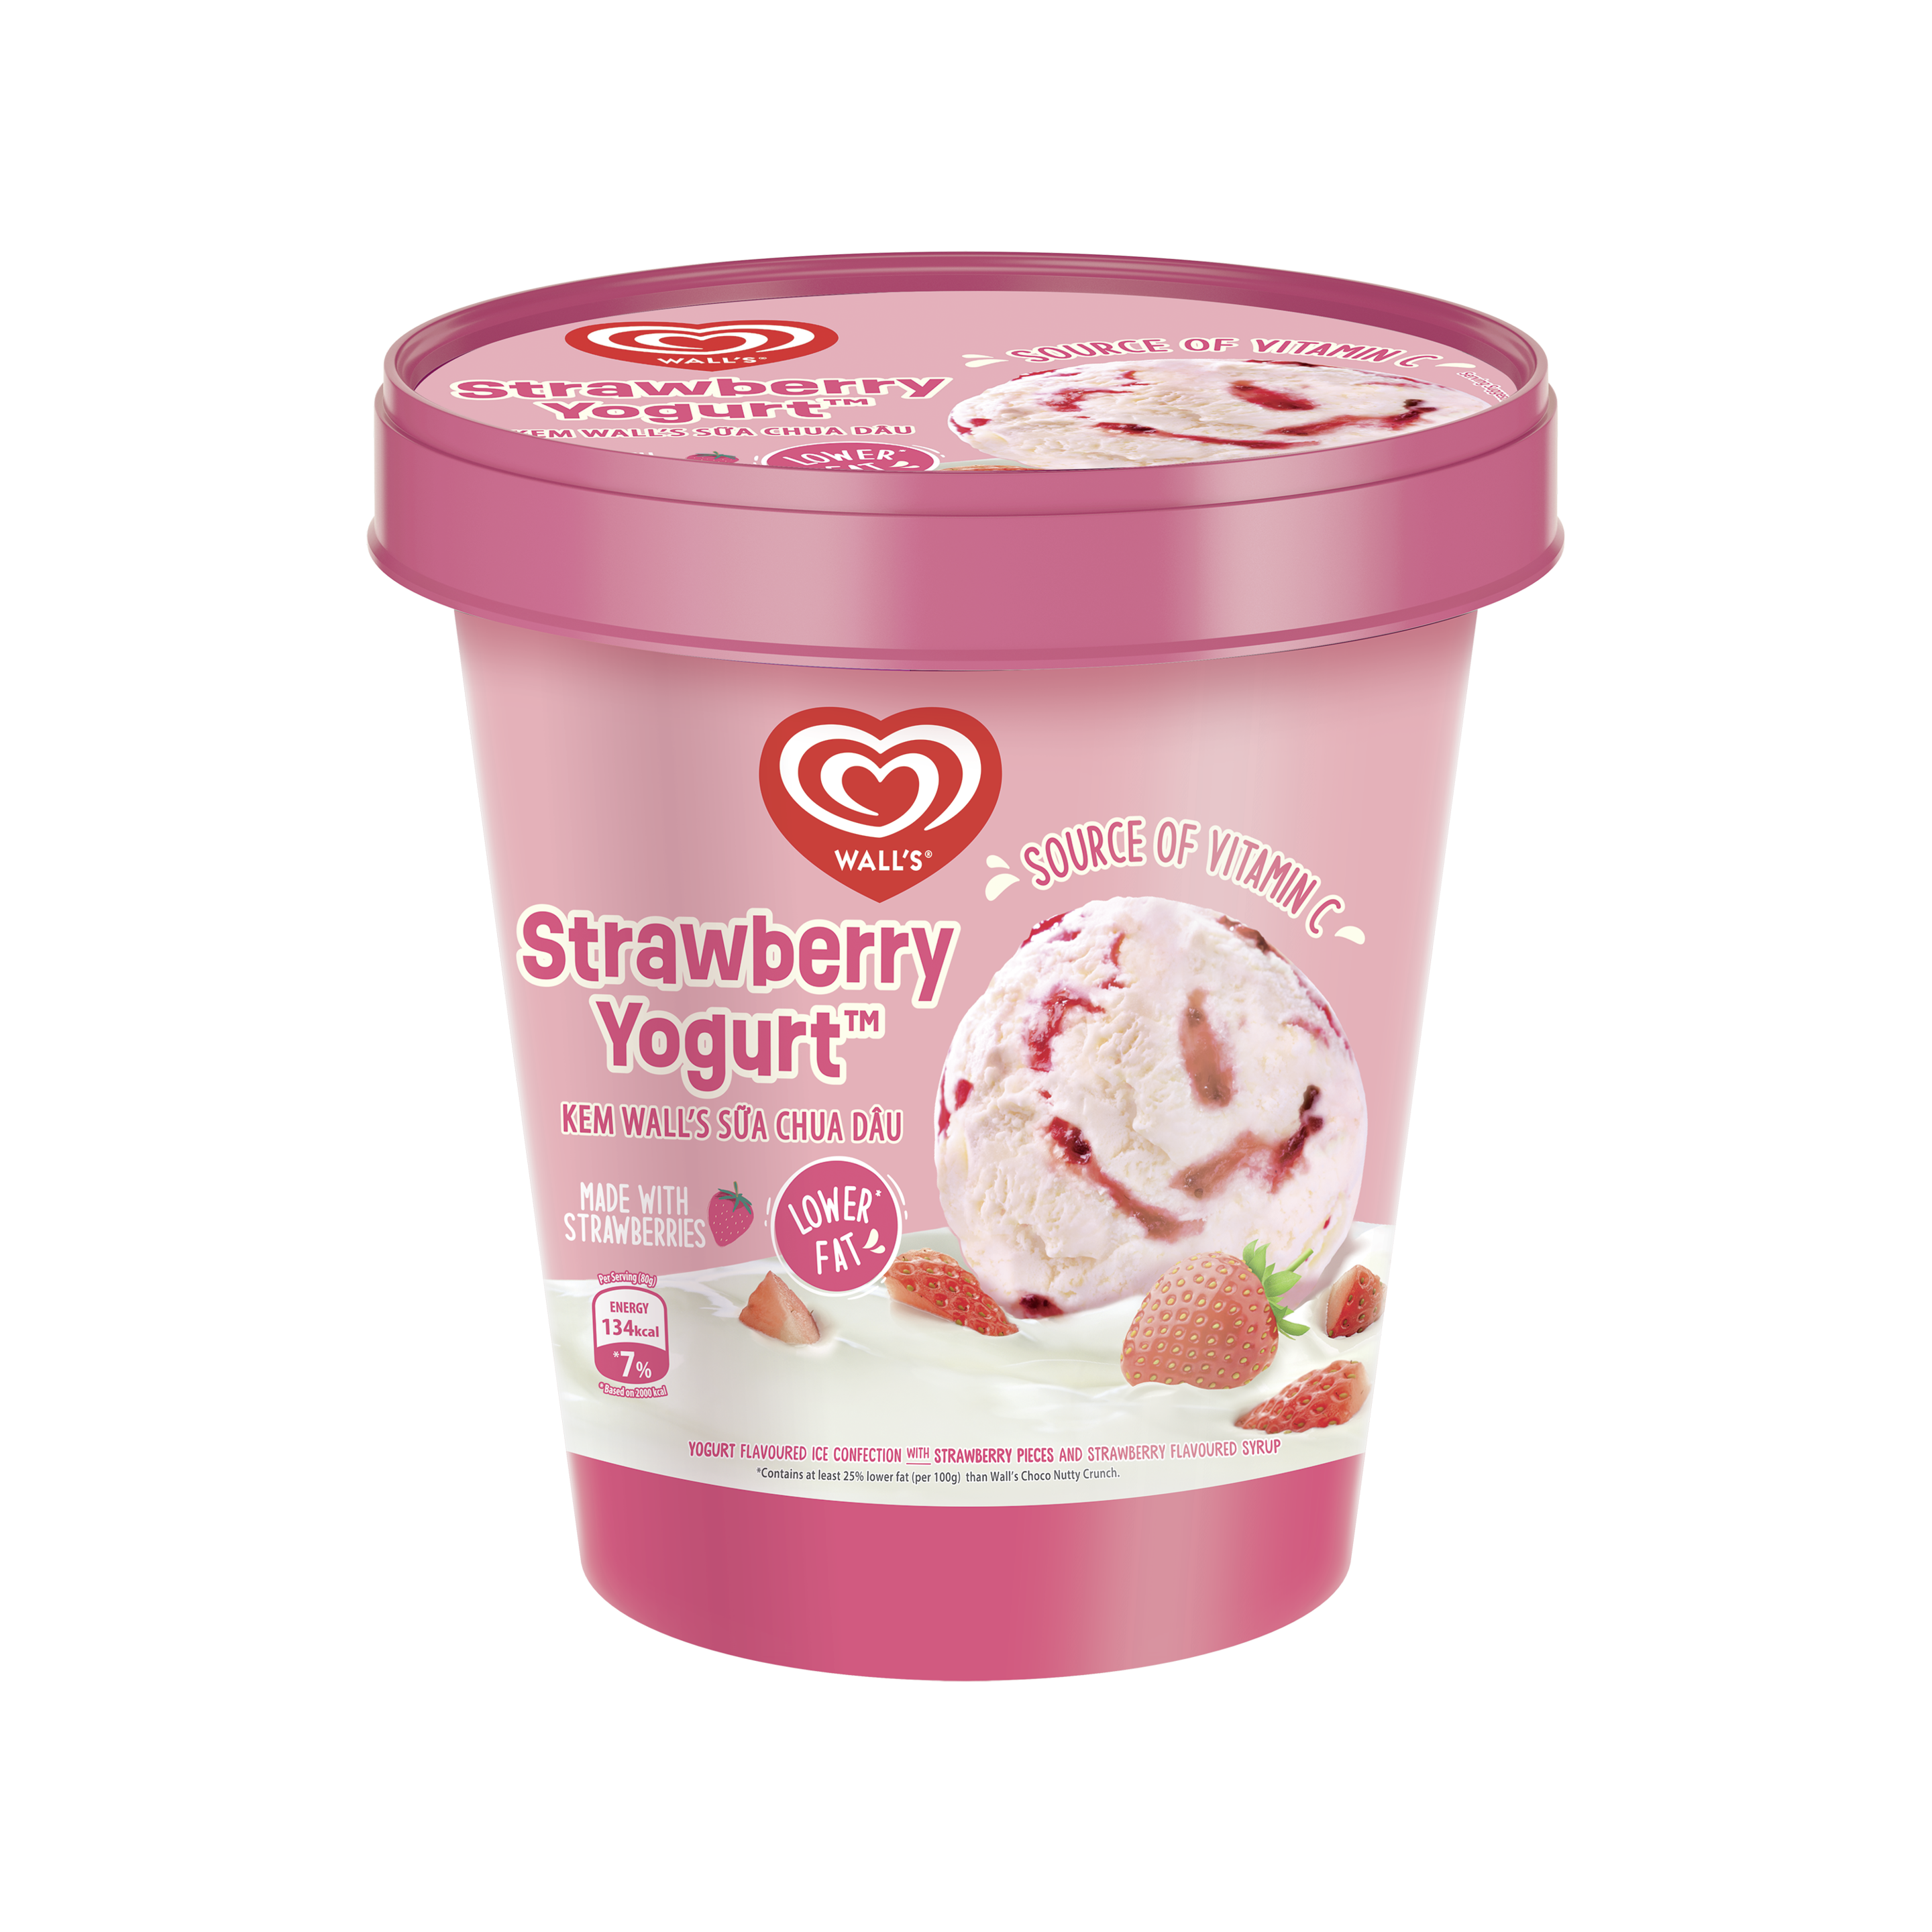 Wall’s Strawberry Yogurt ™